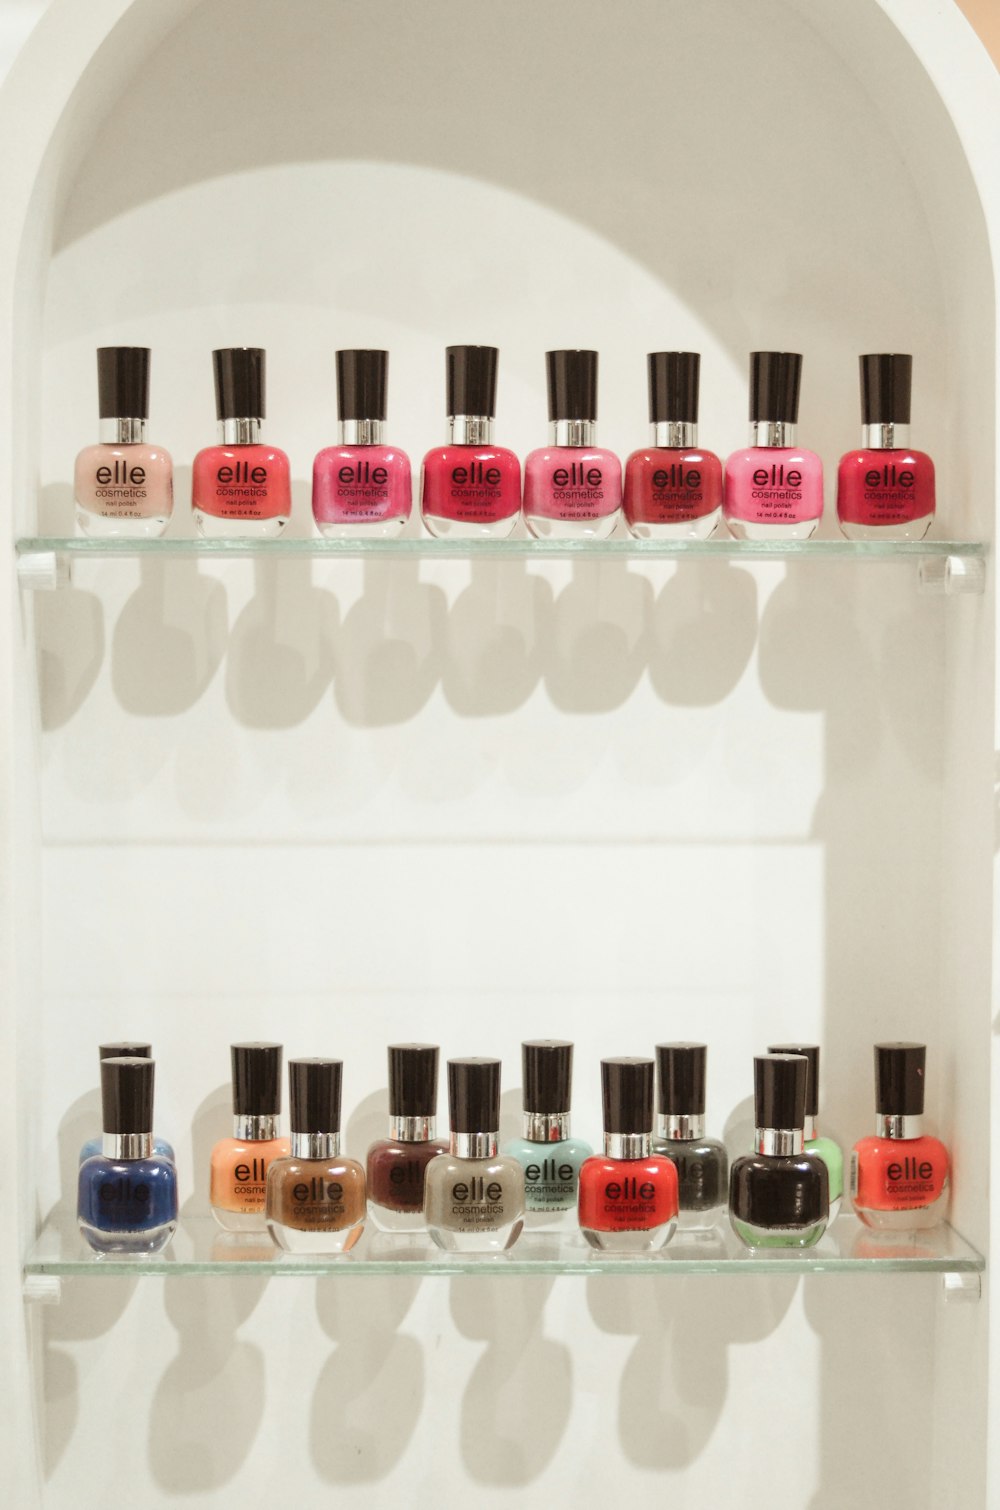 assorted nail polish bottles on white shelf